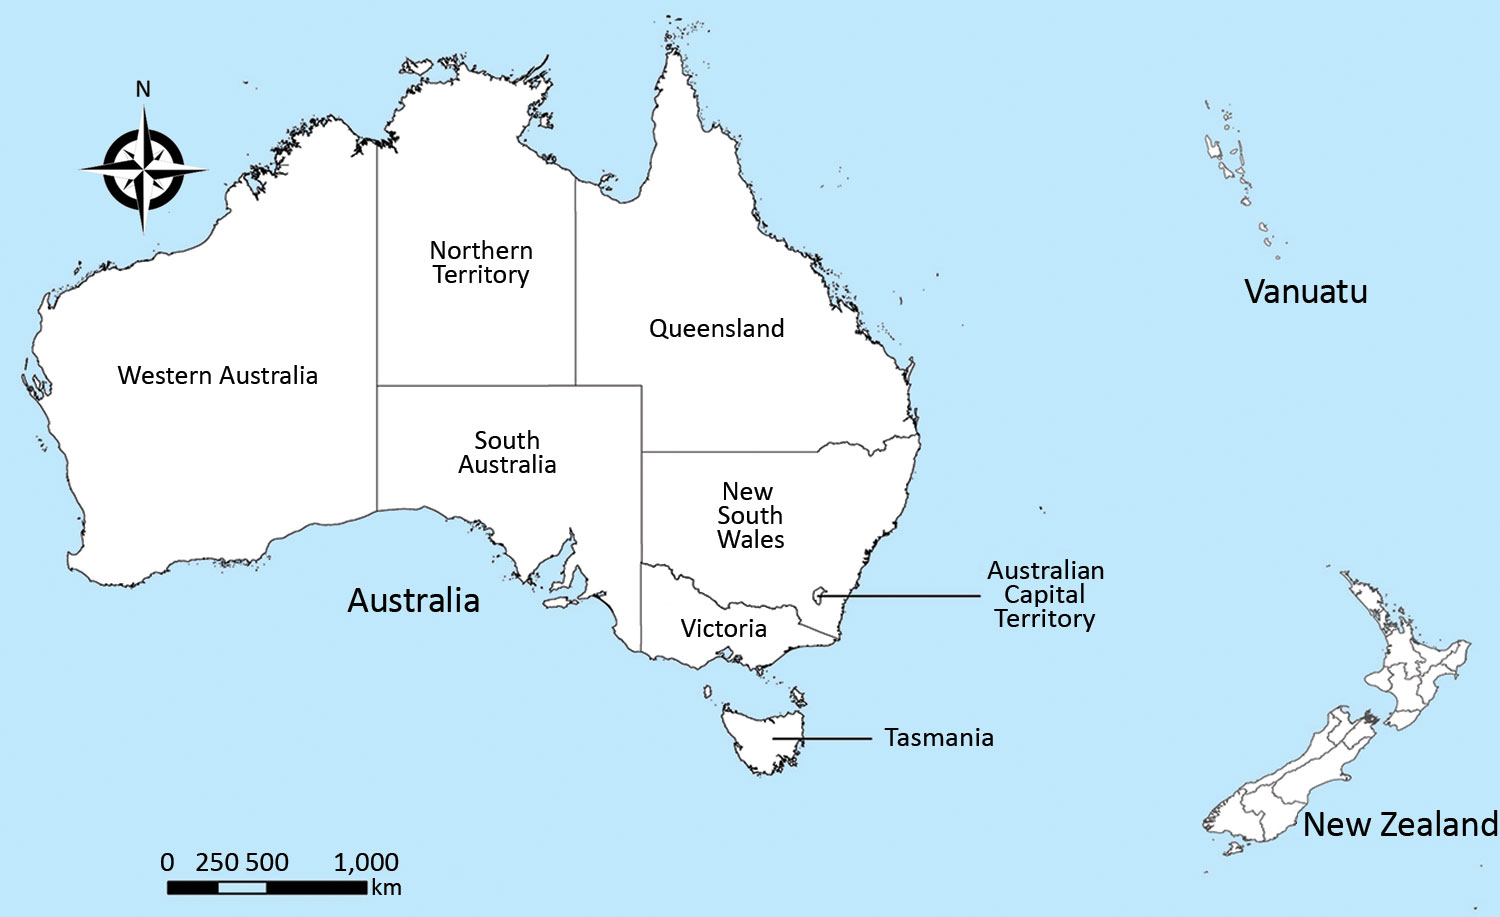 Relative locations of Australia, New Zealand, and Vanuatu.